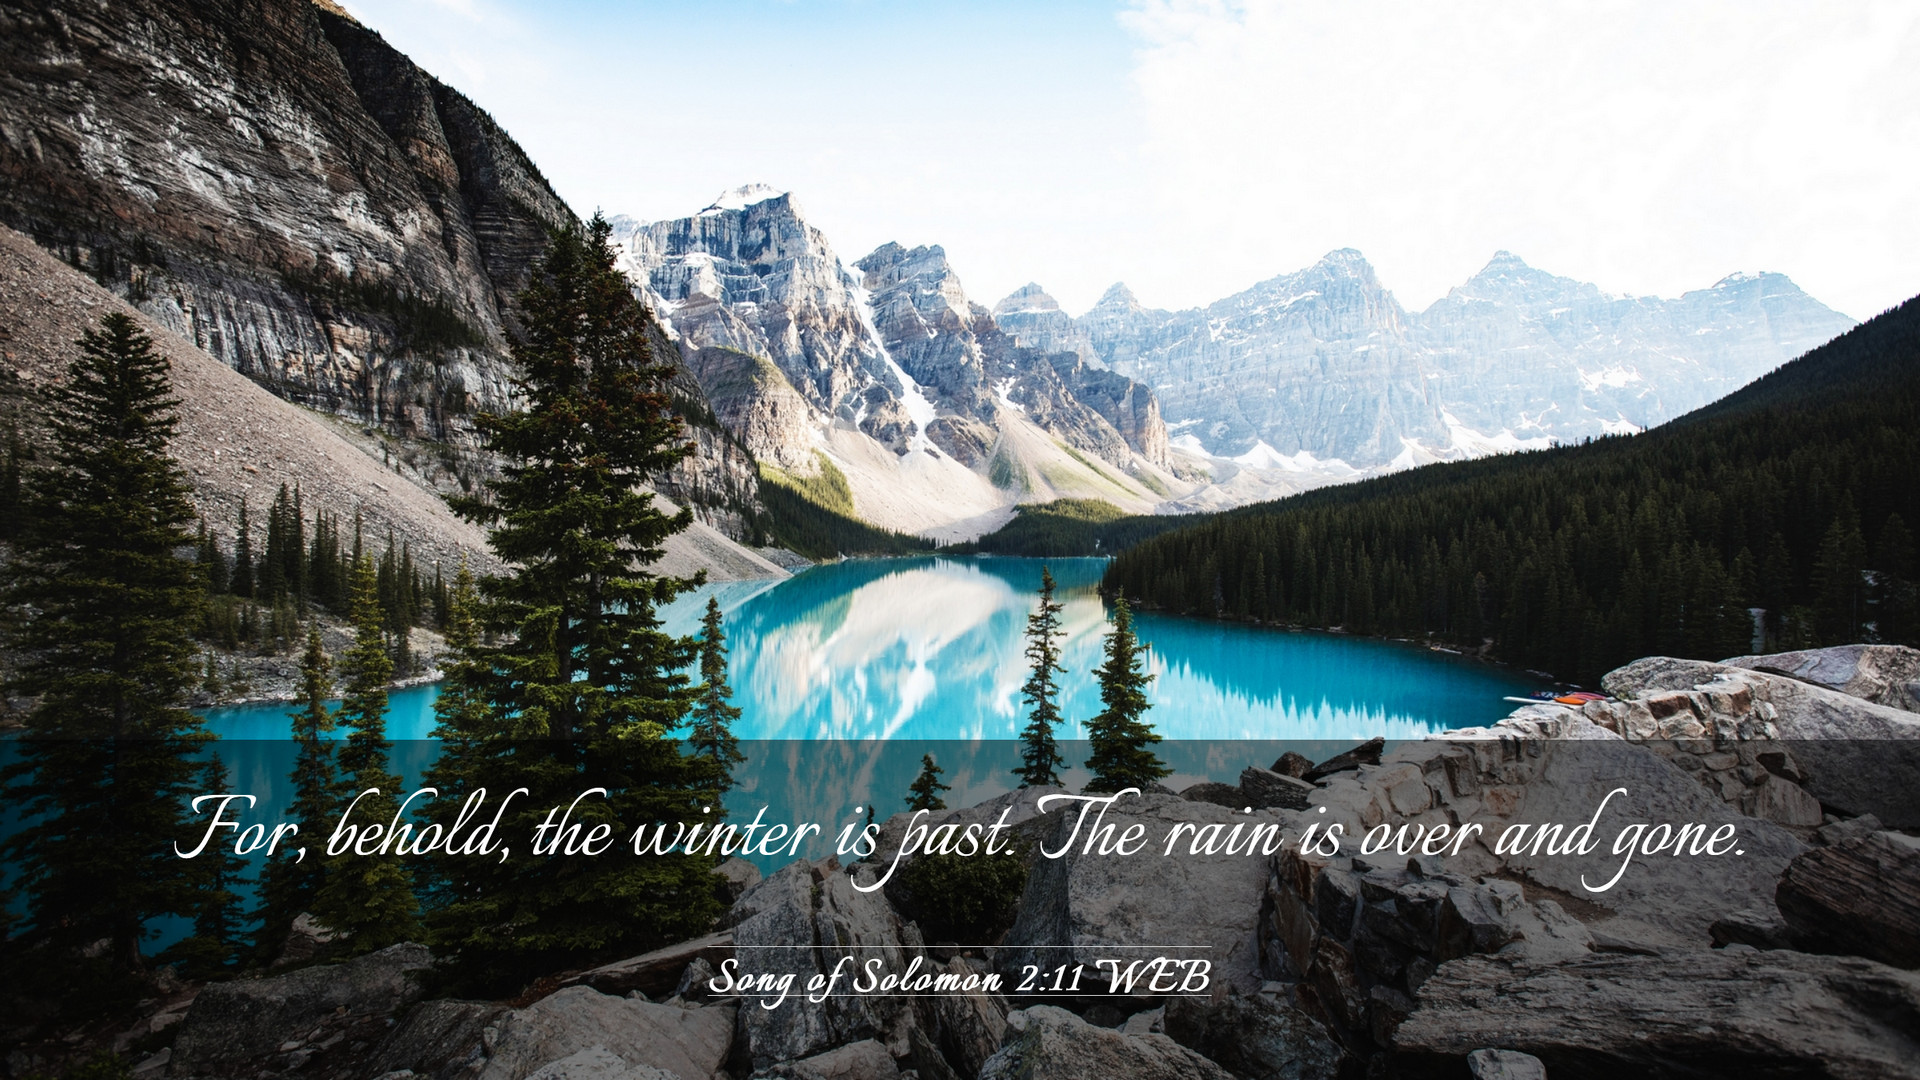 Song of Solomon 2:11 WEB Desktop Wallpaper, behold, the winter is past. The rain is over